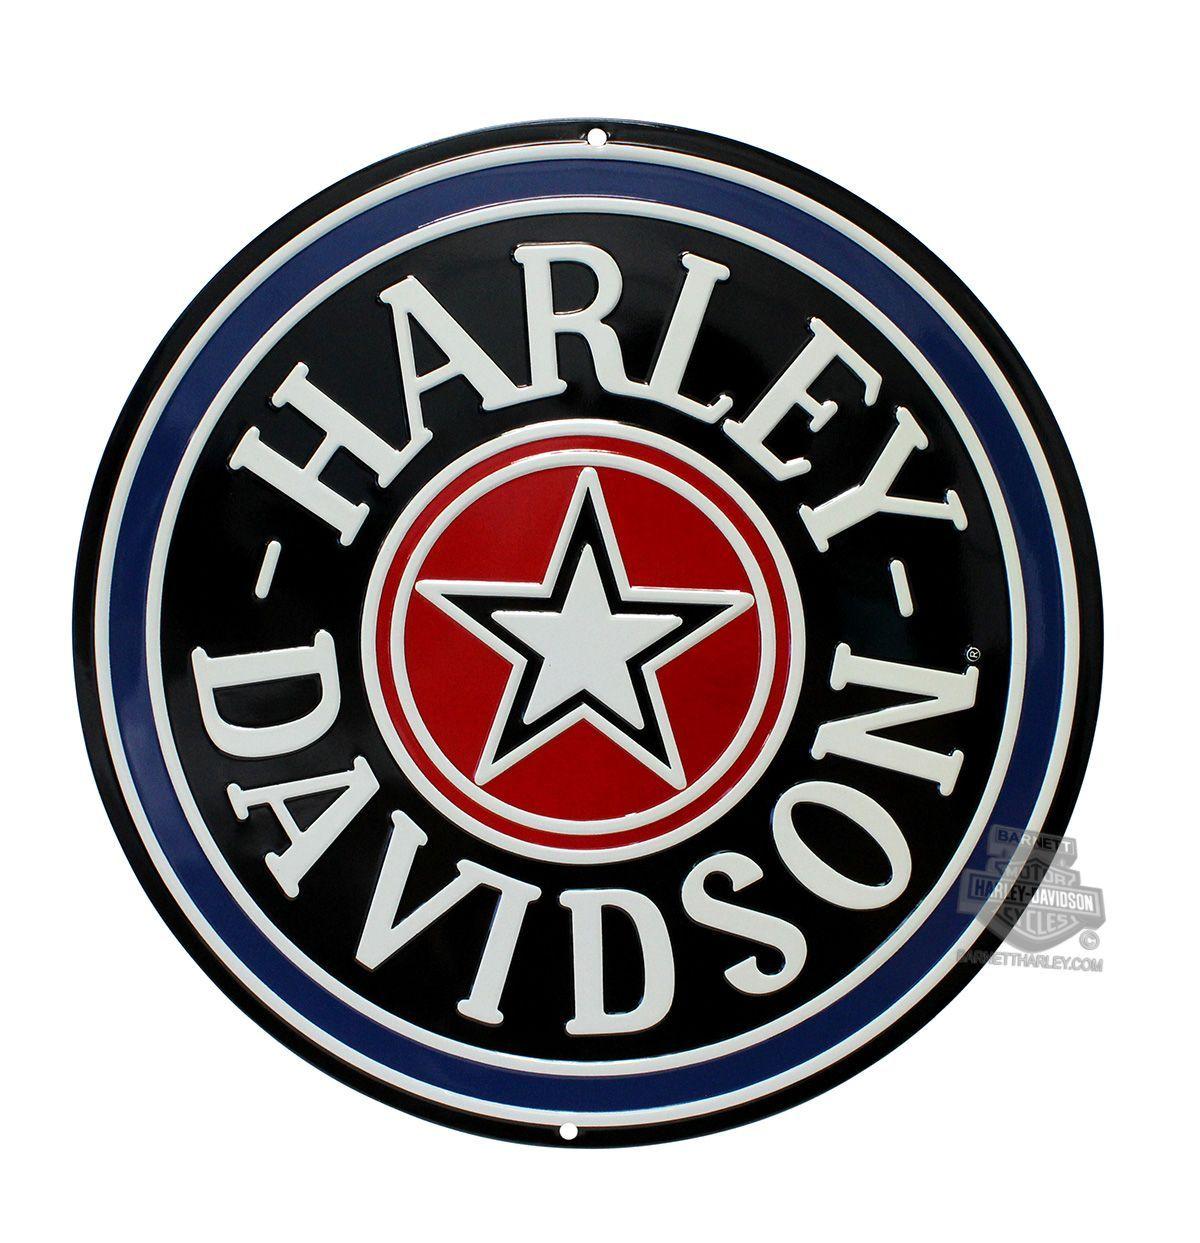 Harley-Davidson Logo - harley davidson logo - Поиск в Google. Harley Davidson